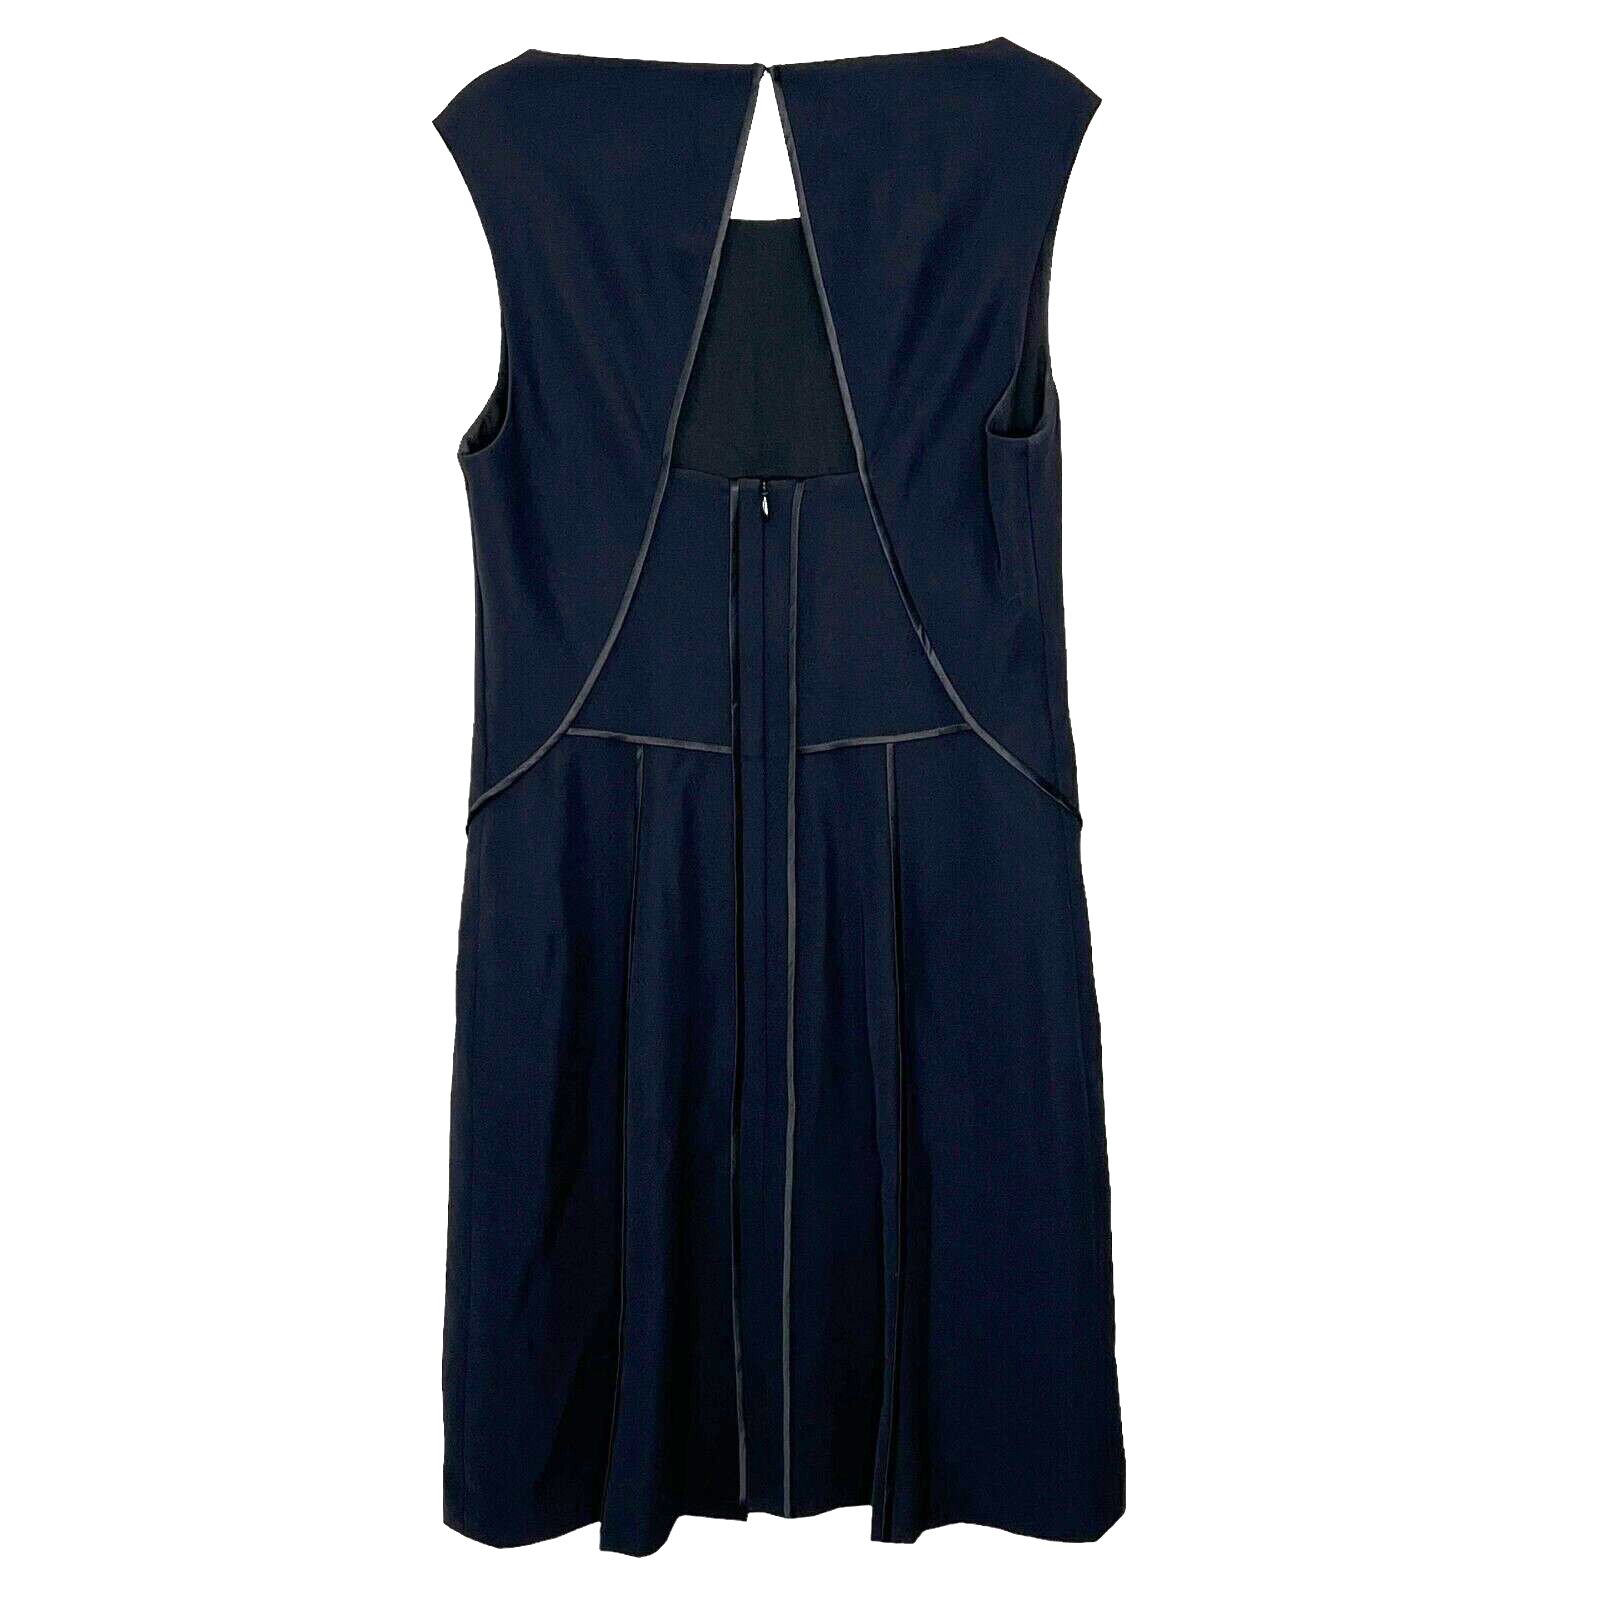 Armani Collezioni Emporio Armani Black Sleeveless Dress Satin Piping Size 6